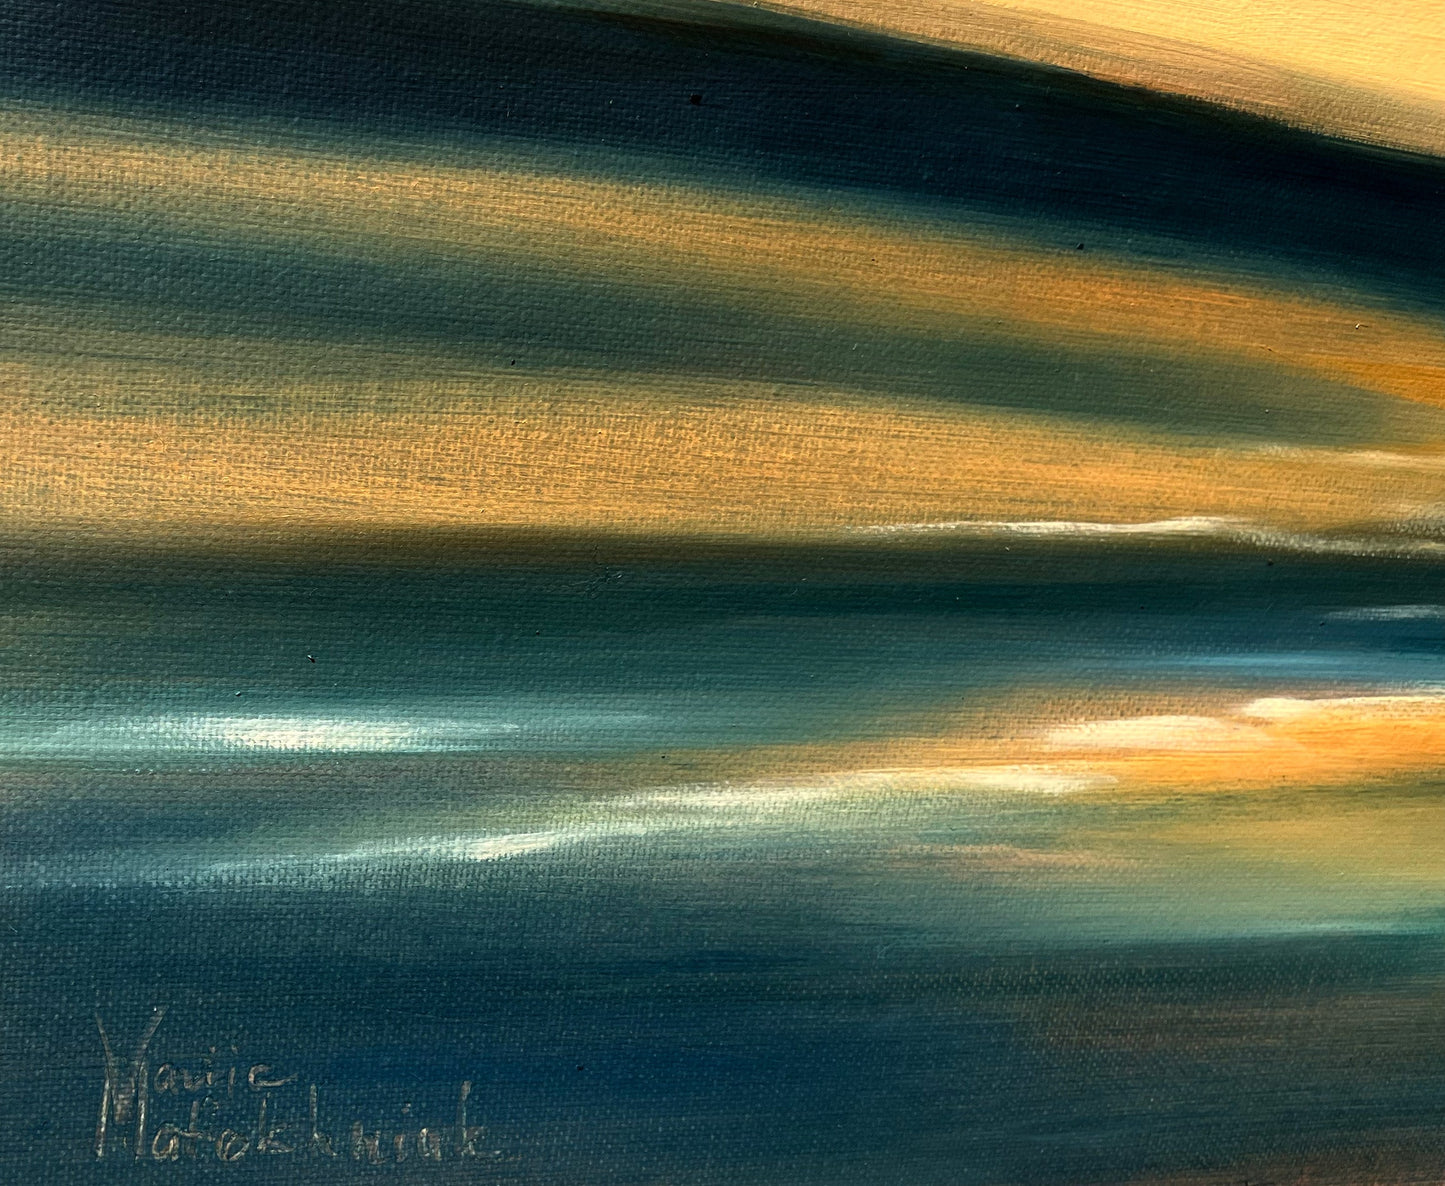 Original Painting "Golden Sky" 